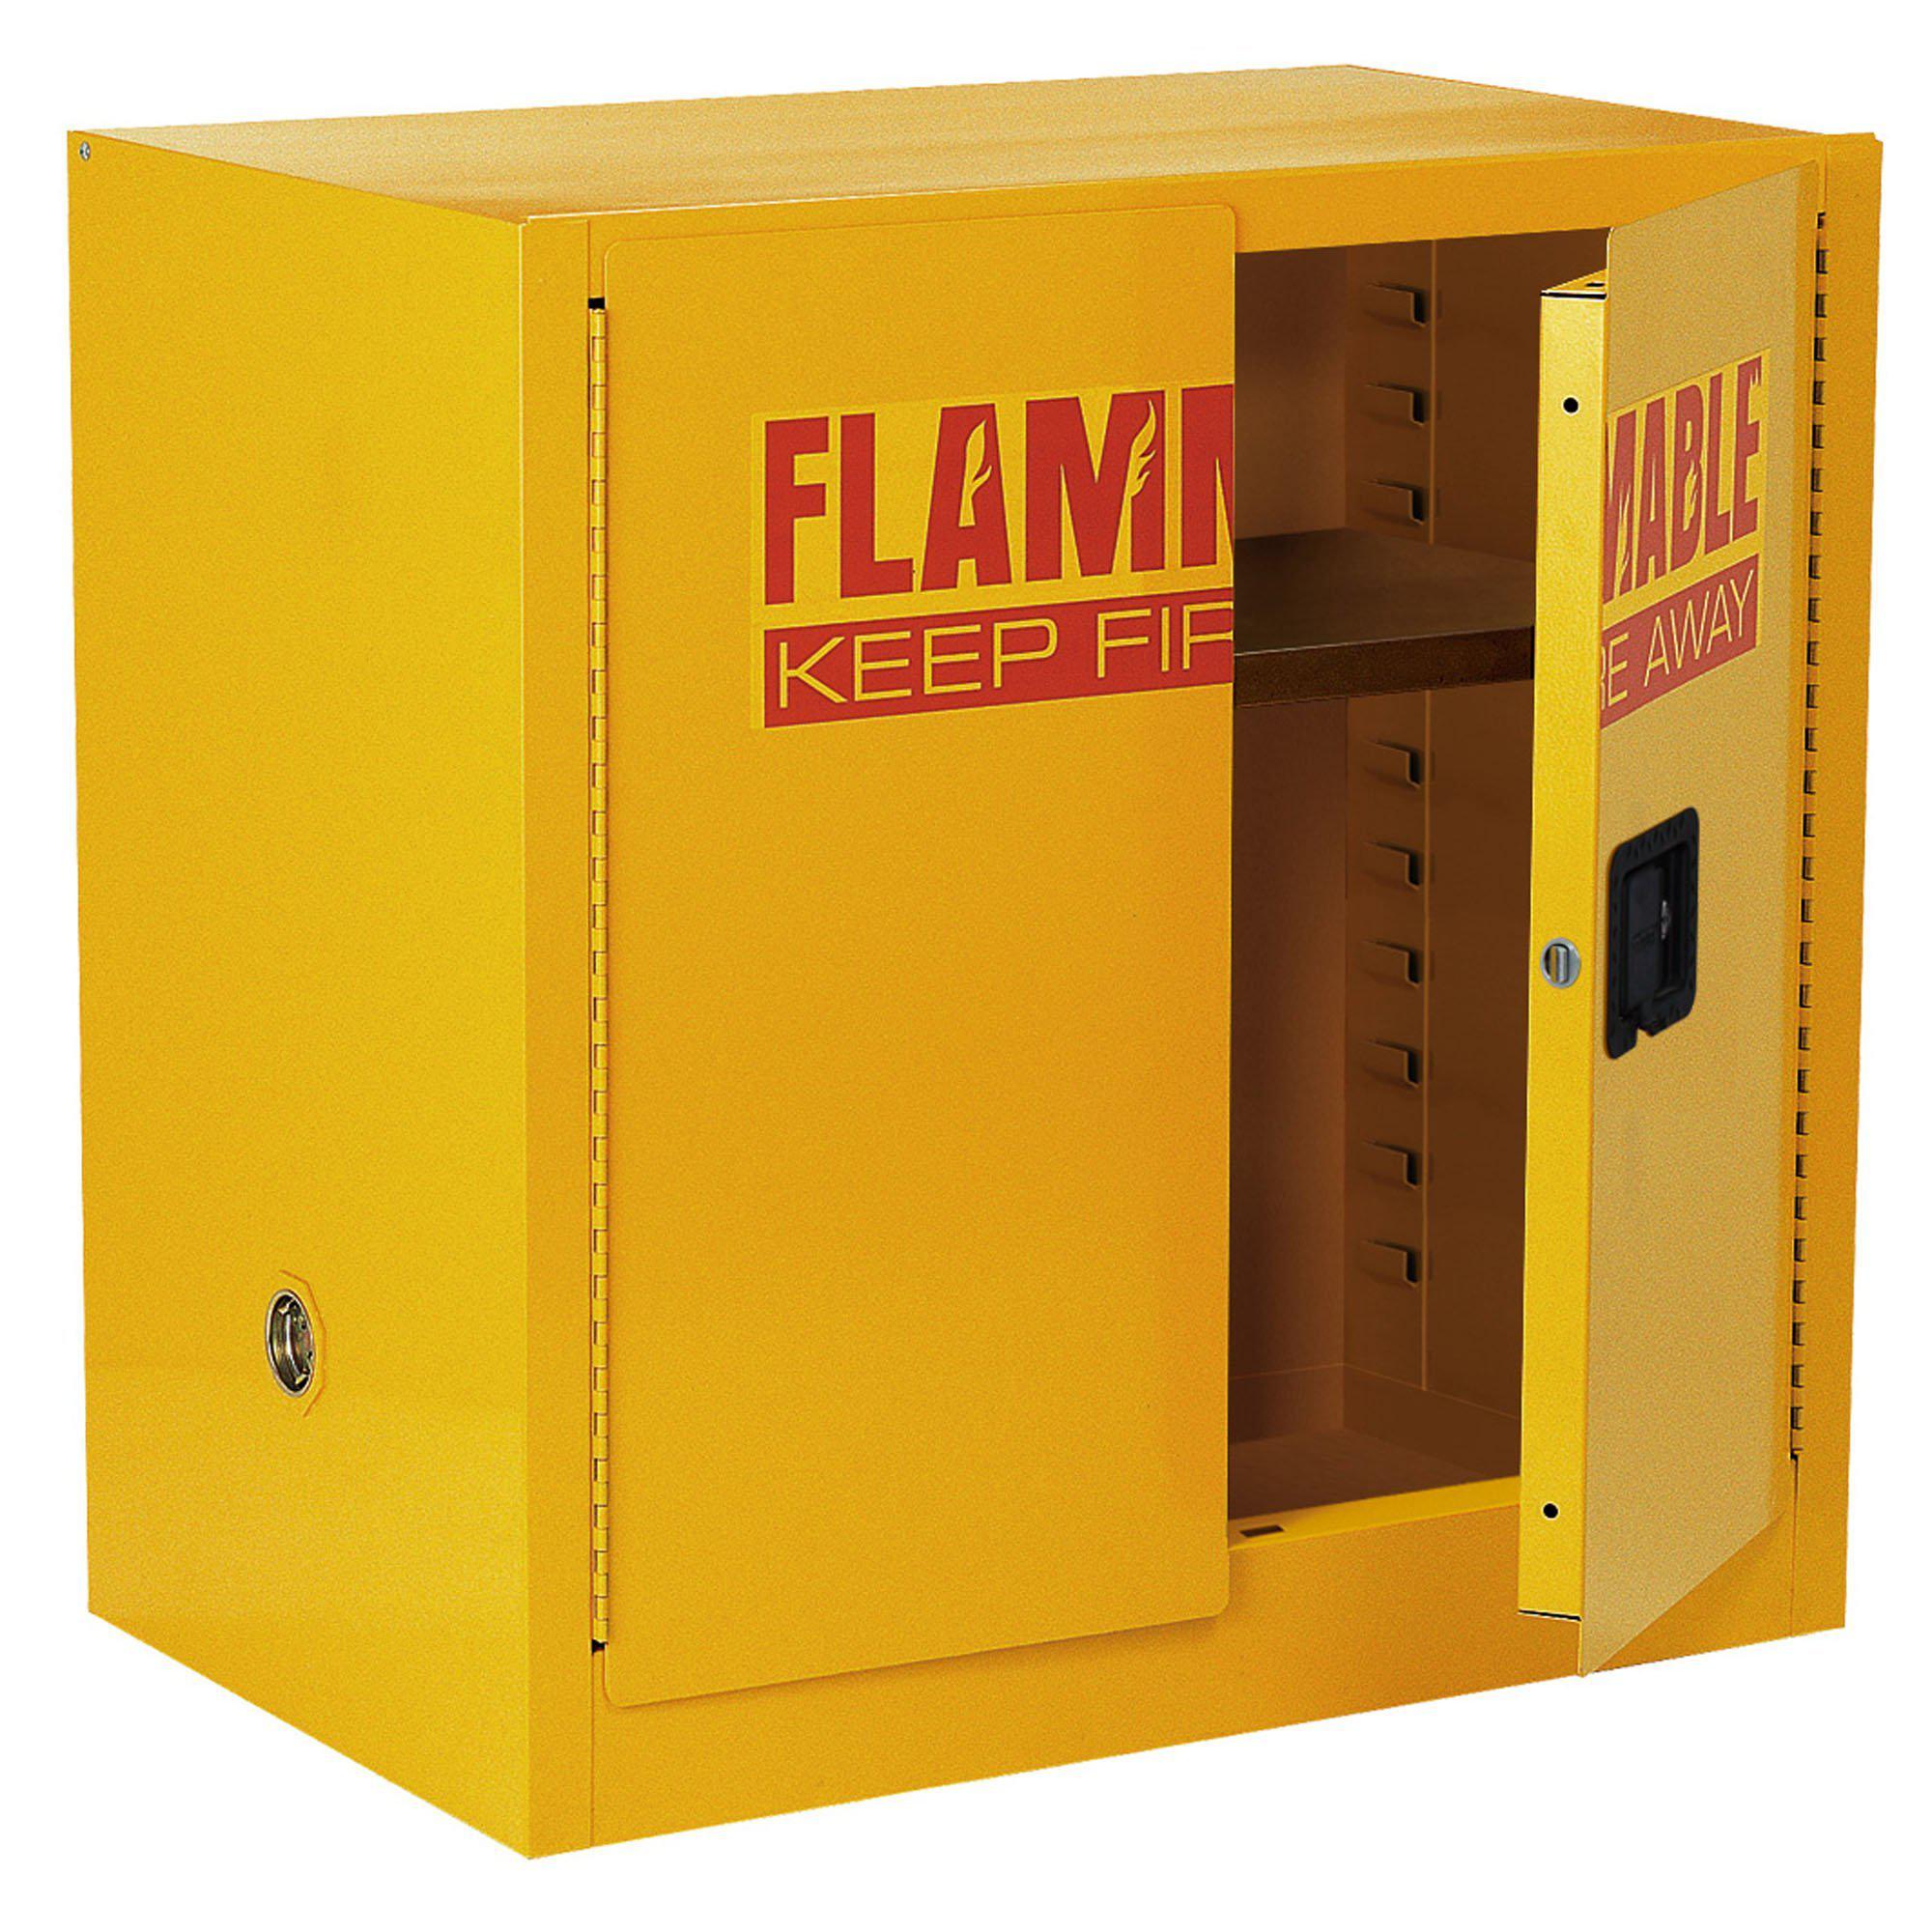 Hazmat Safety Storage Cabinets